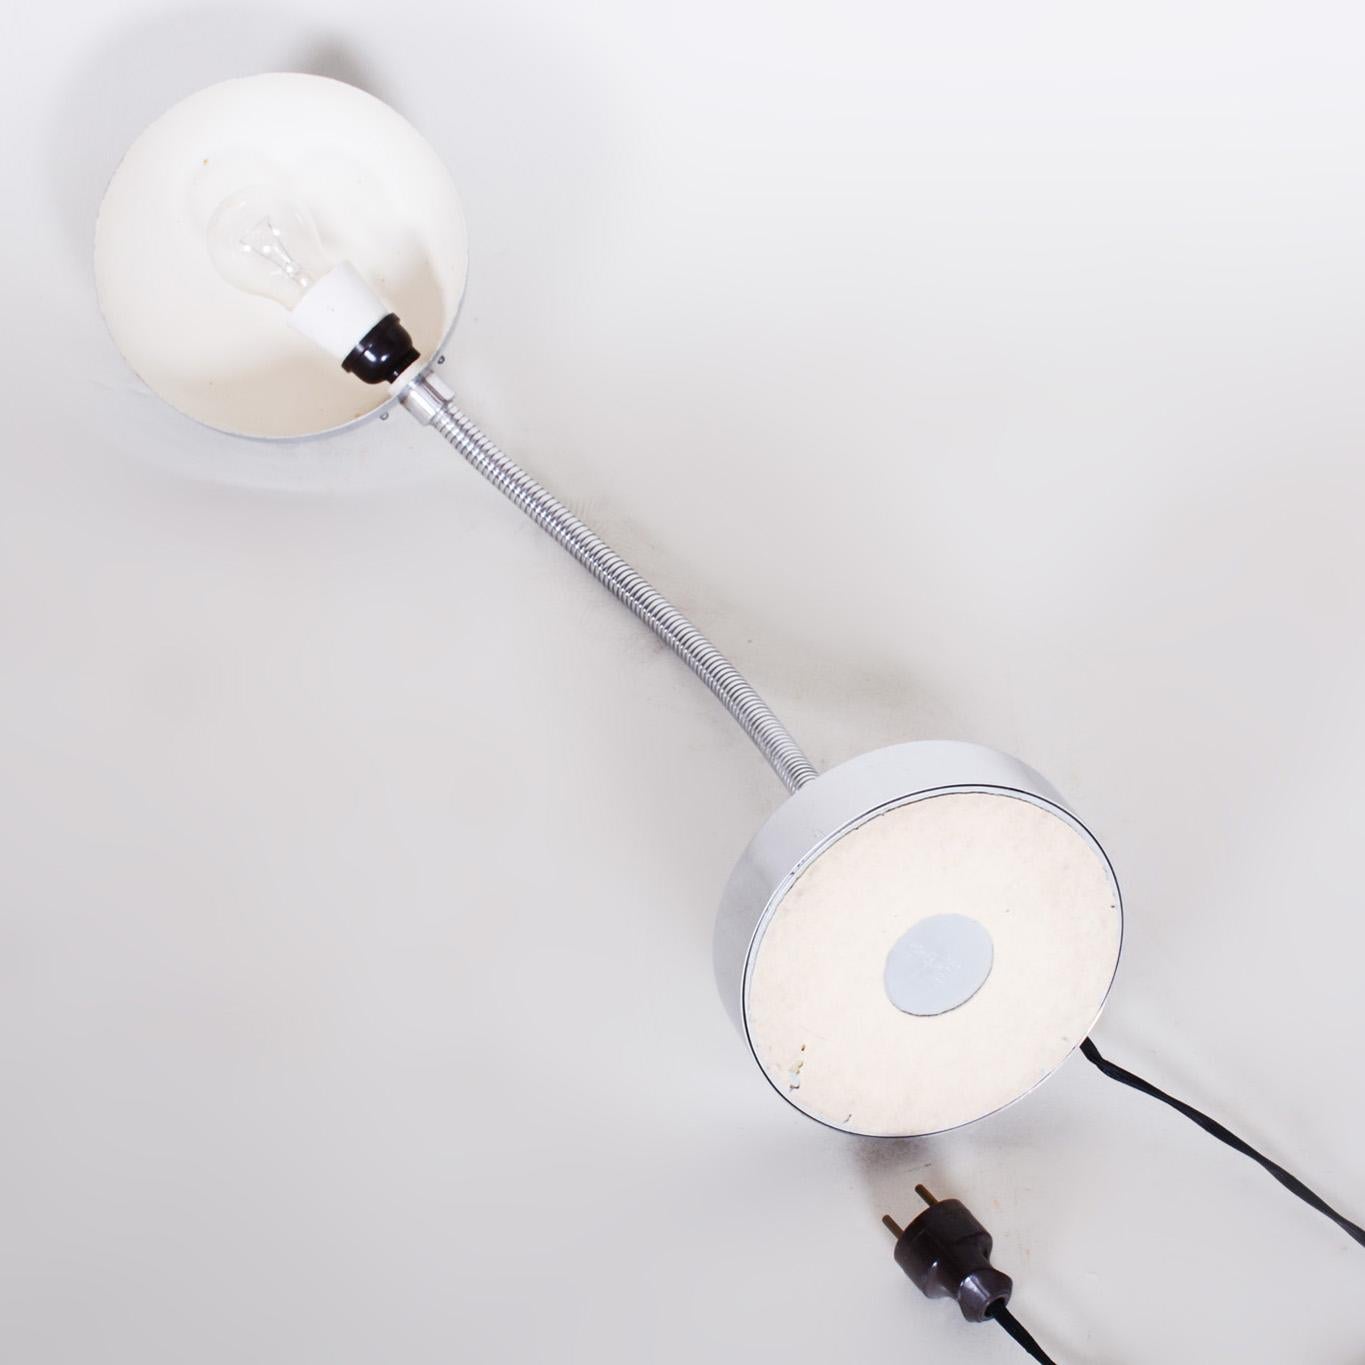 Chrome Bauhaus Table Lamp, Newly Electrified, Designer M. Prokop, Czechia, 1920s For Sale 2